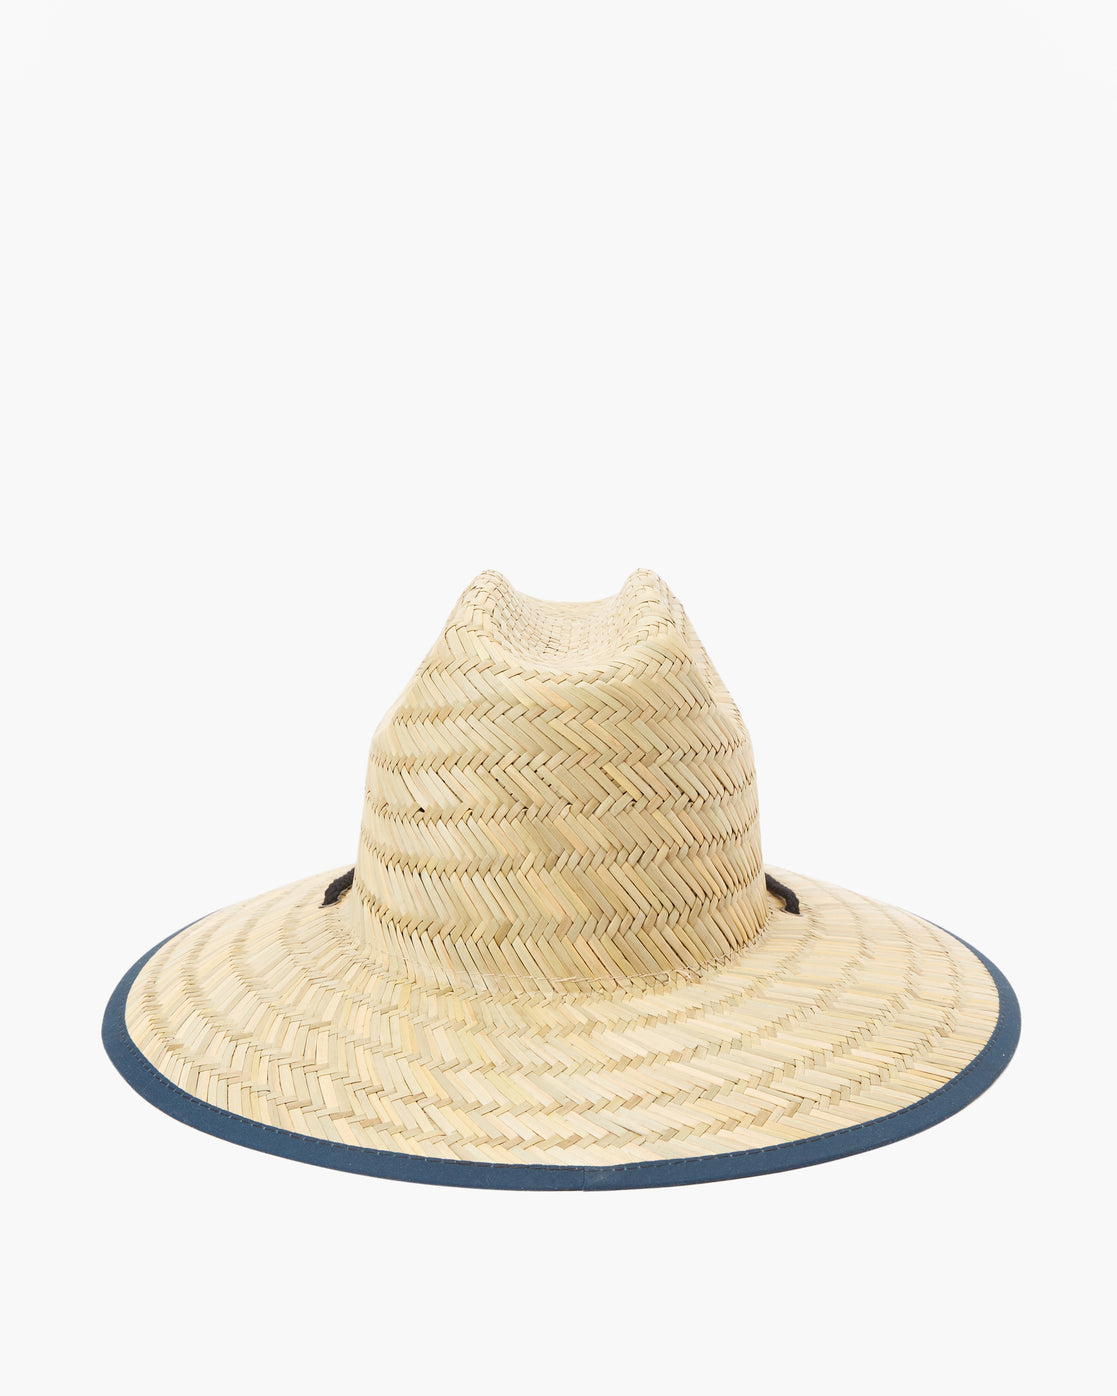 Tides Print Straw Lifeguard Hat - ABYHA00216